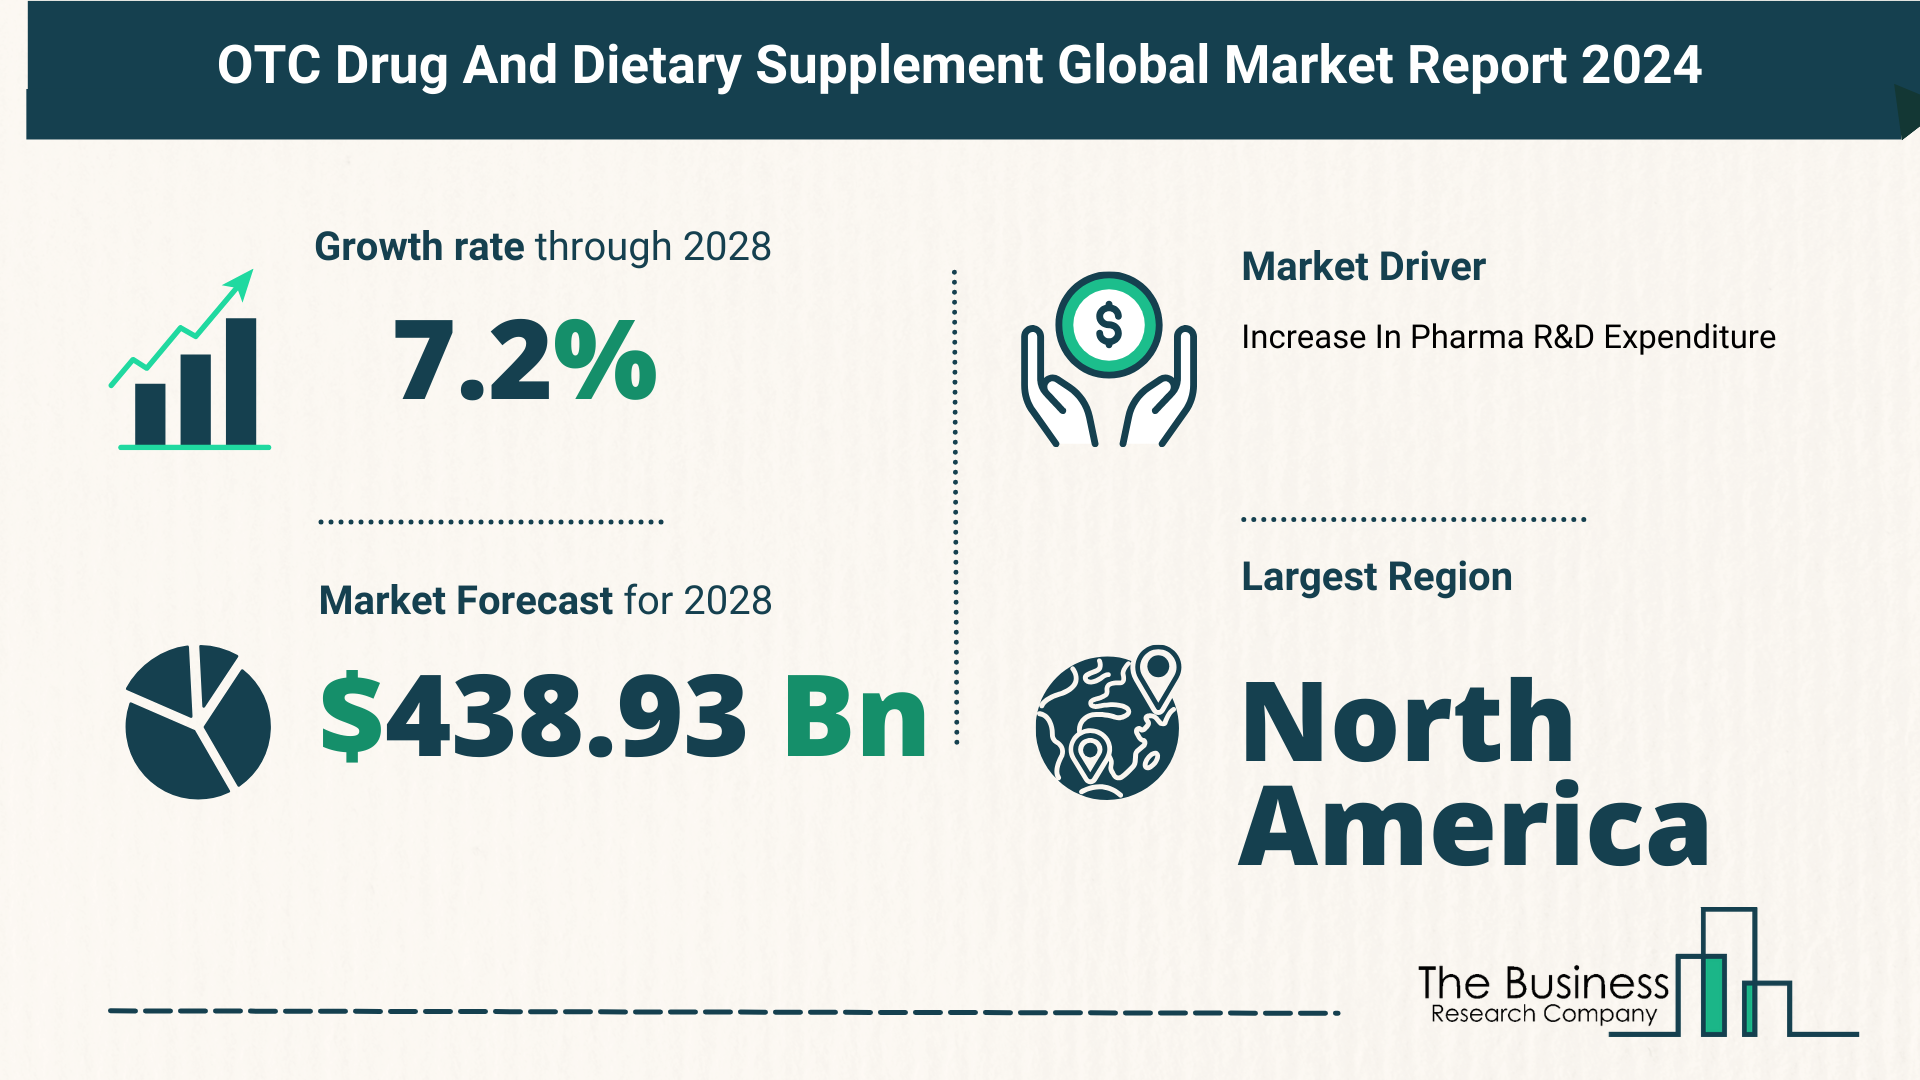 Global OTC Drug And Dietary Supplement Market